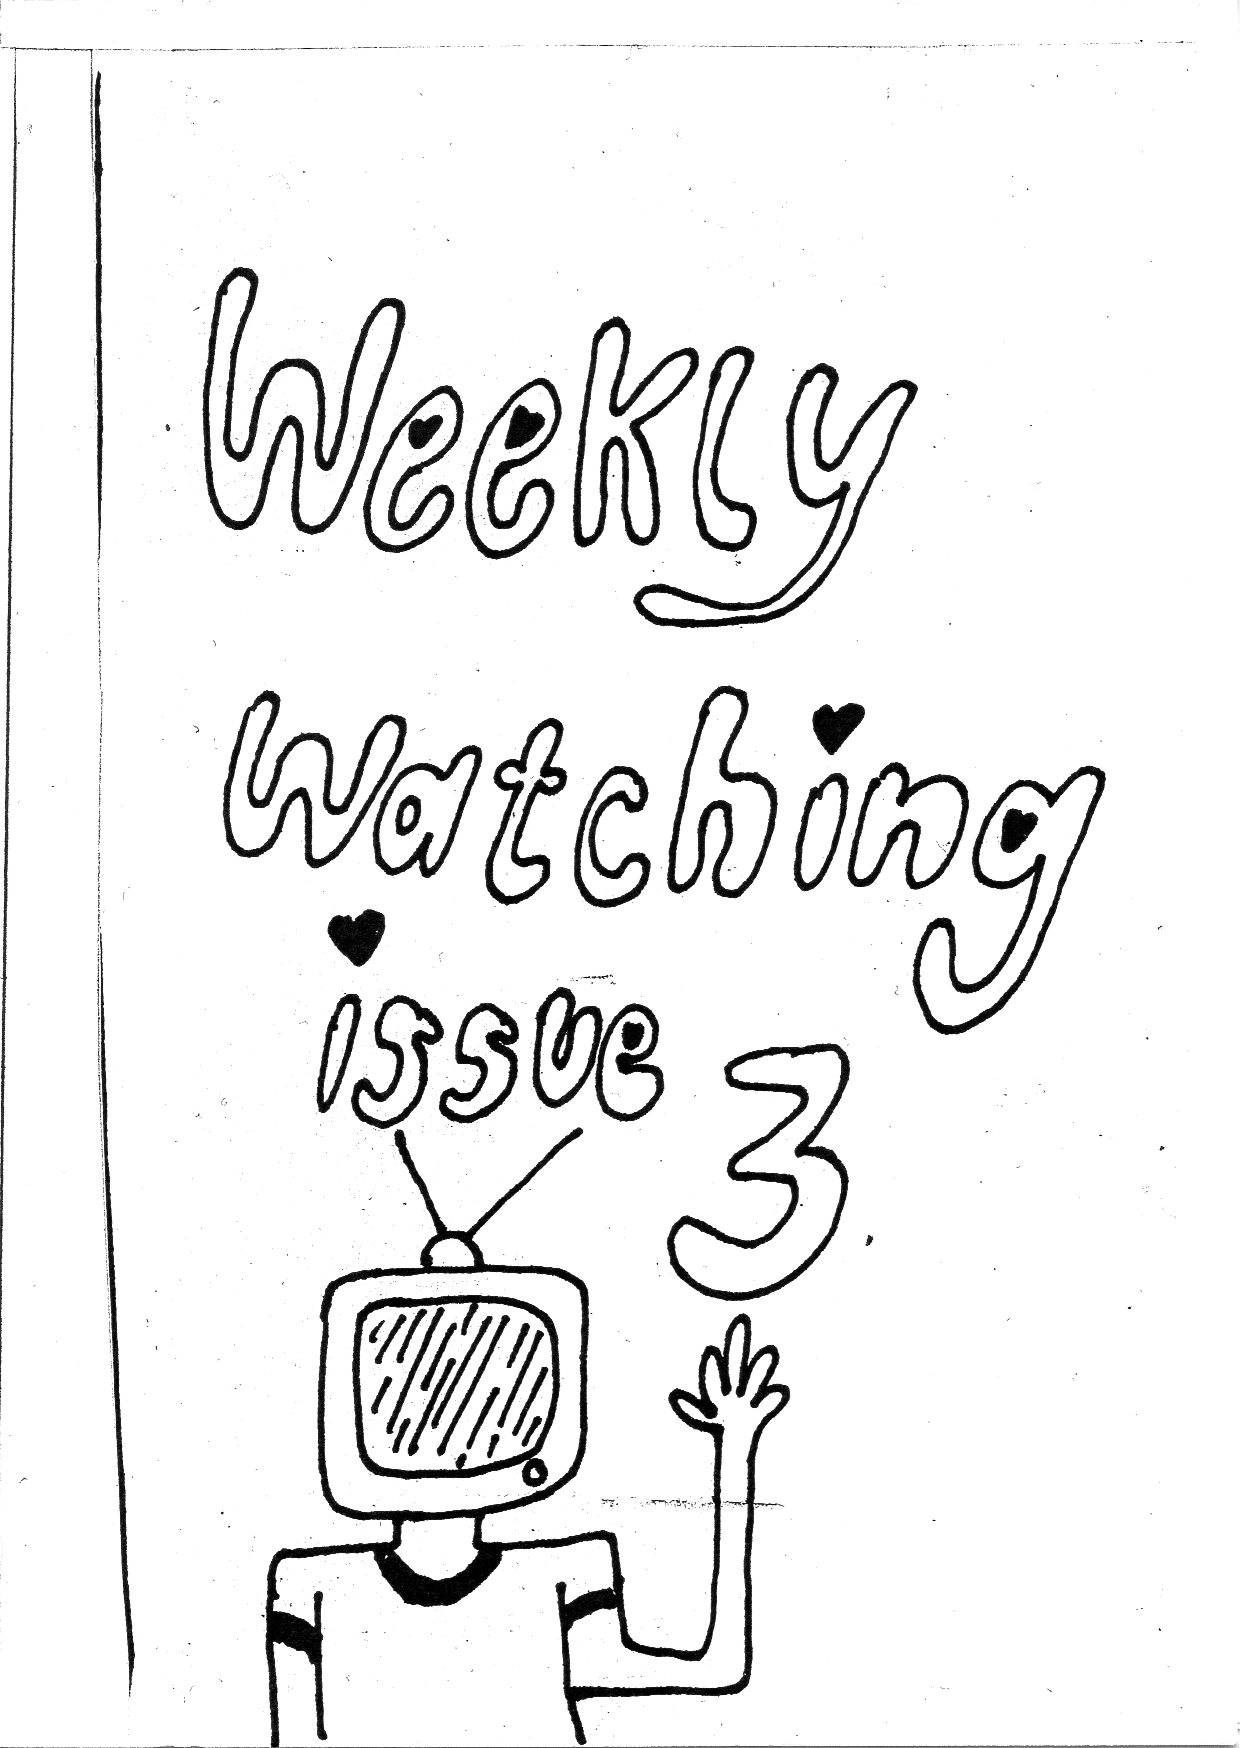 weeklywatching issue 3